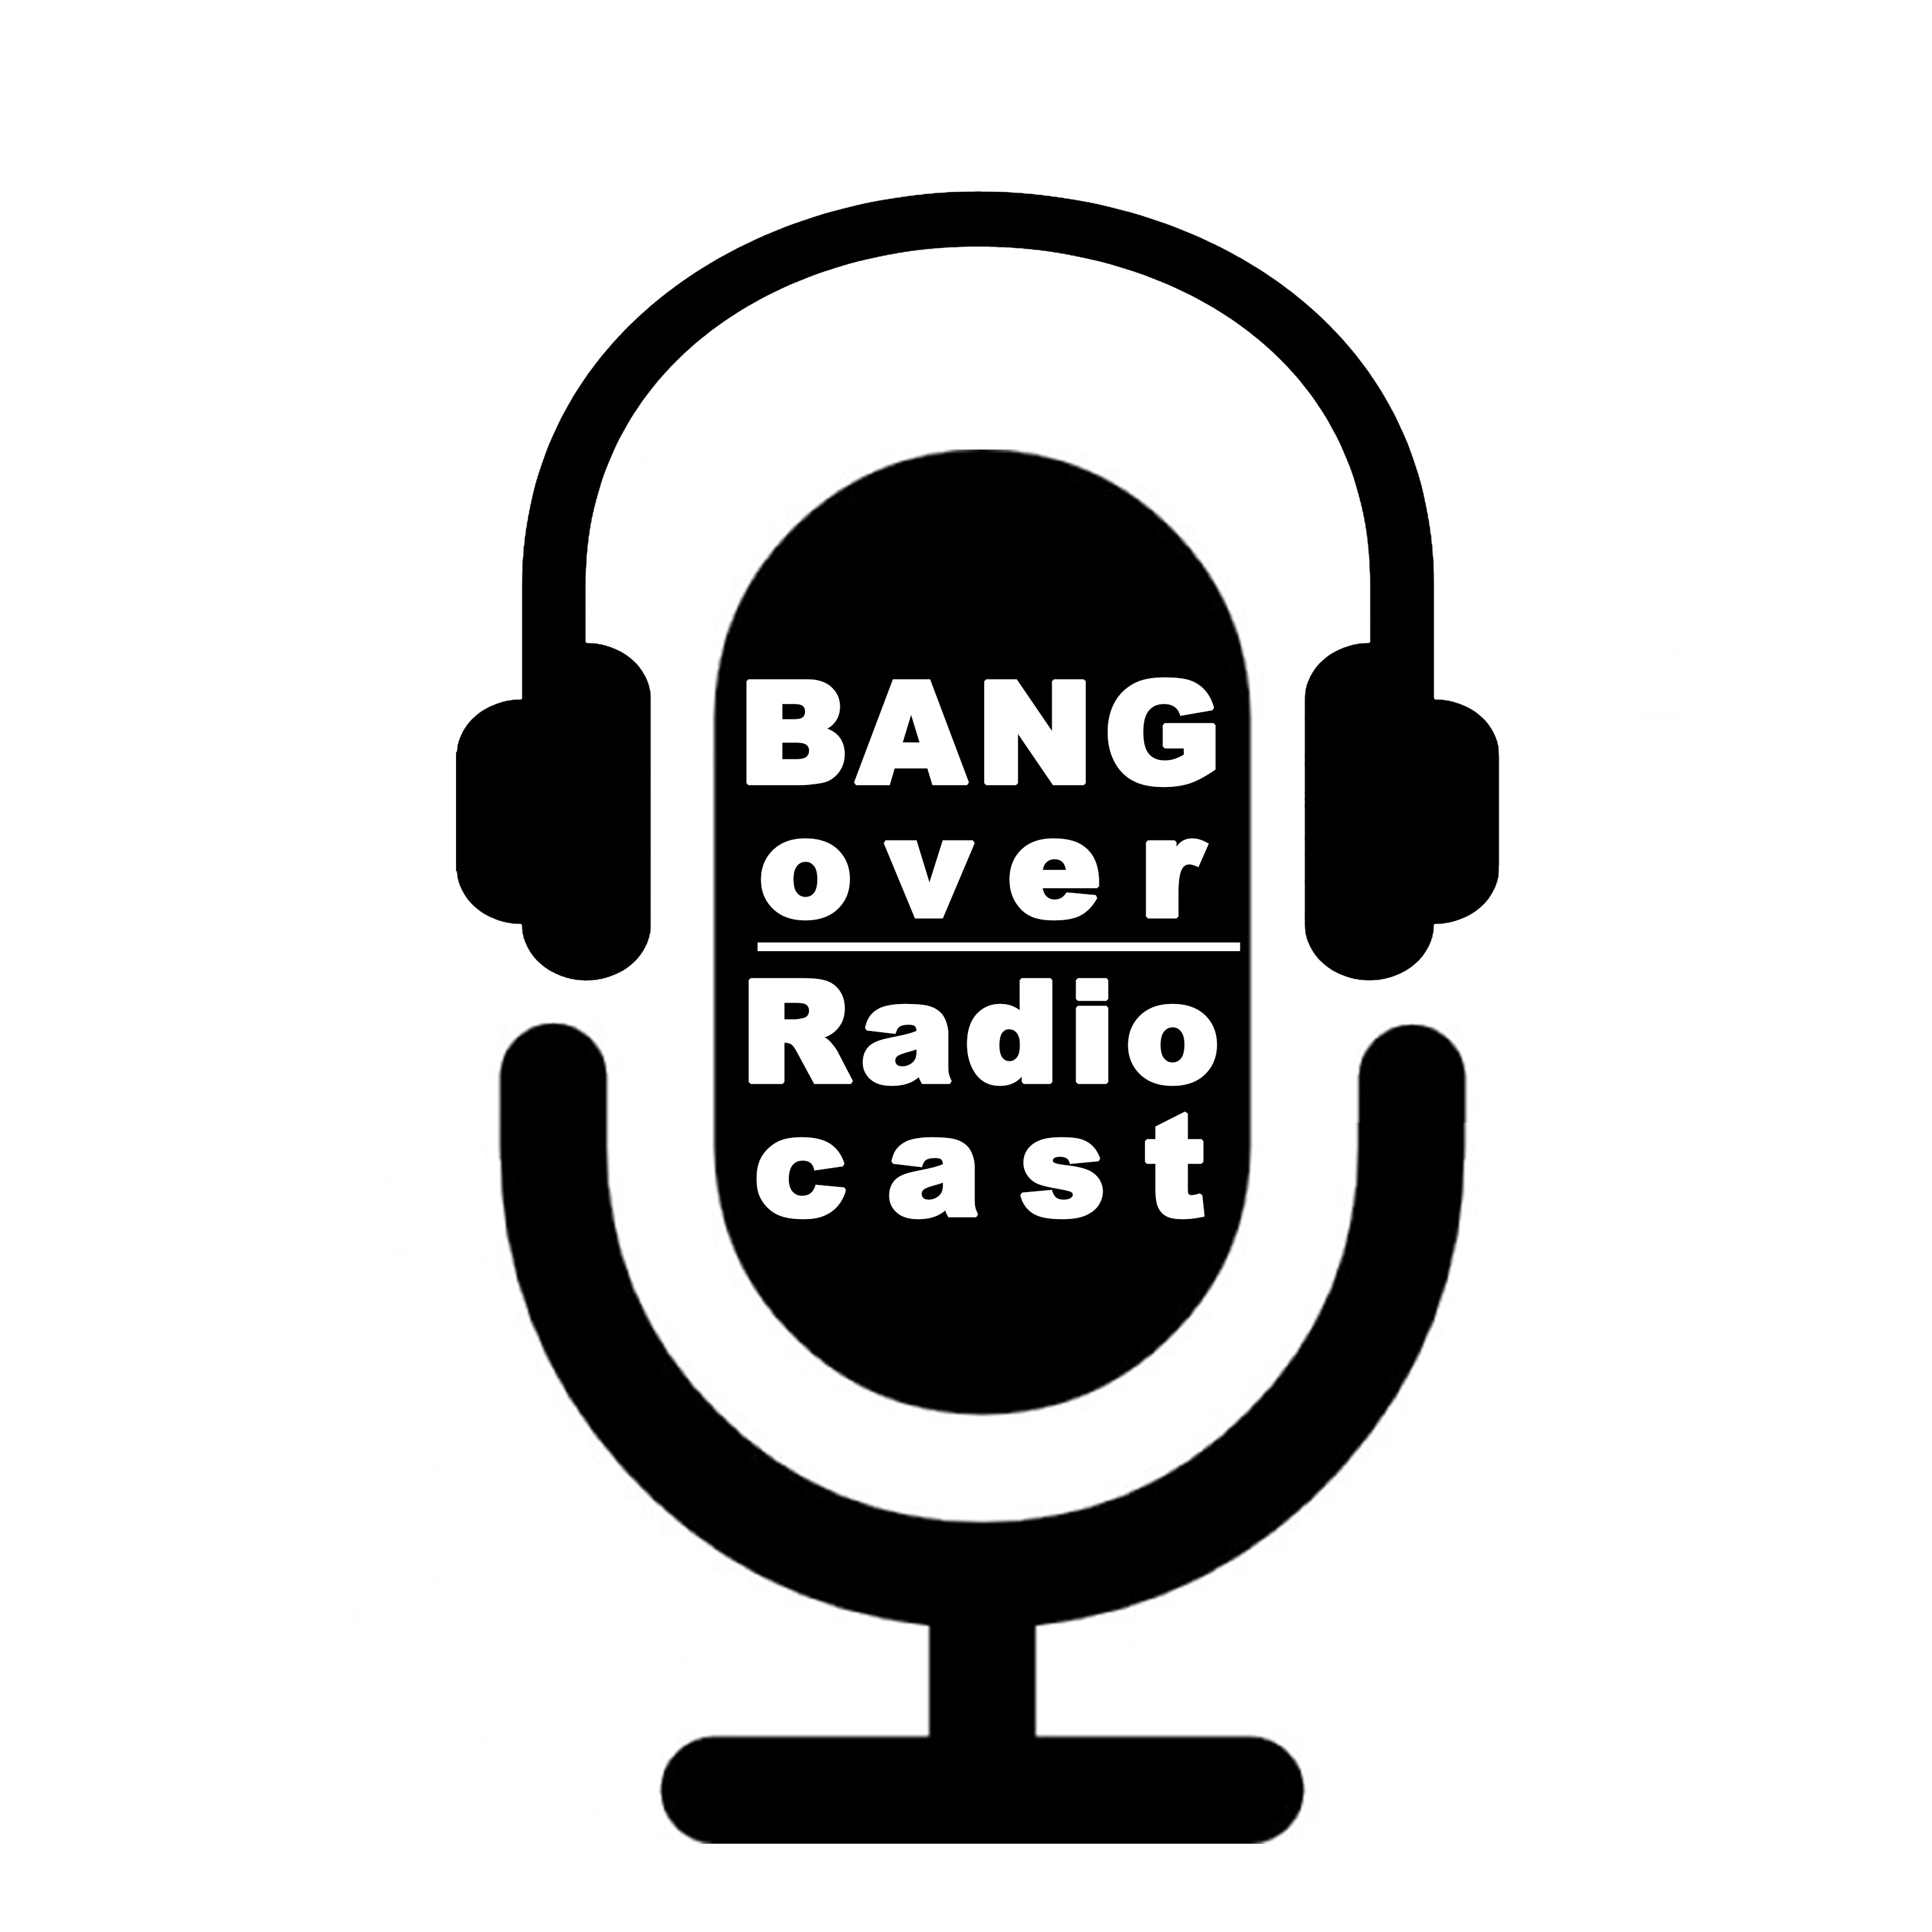 The BANGover Radiocast